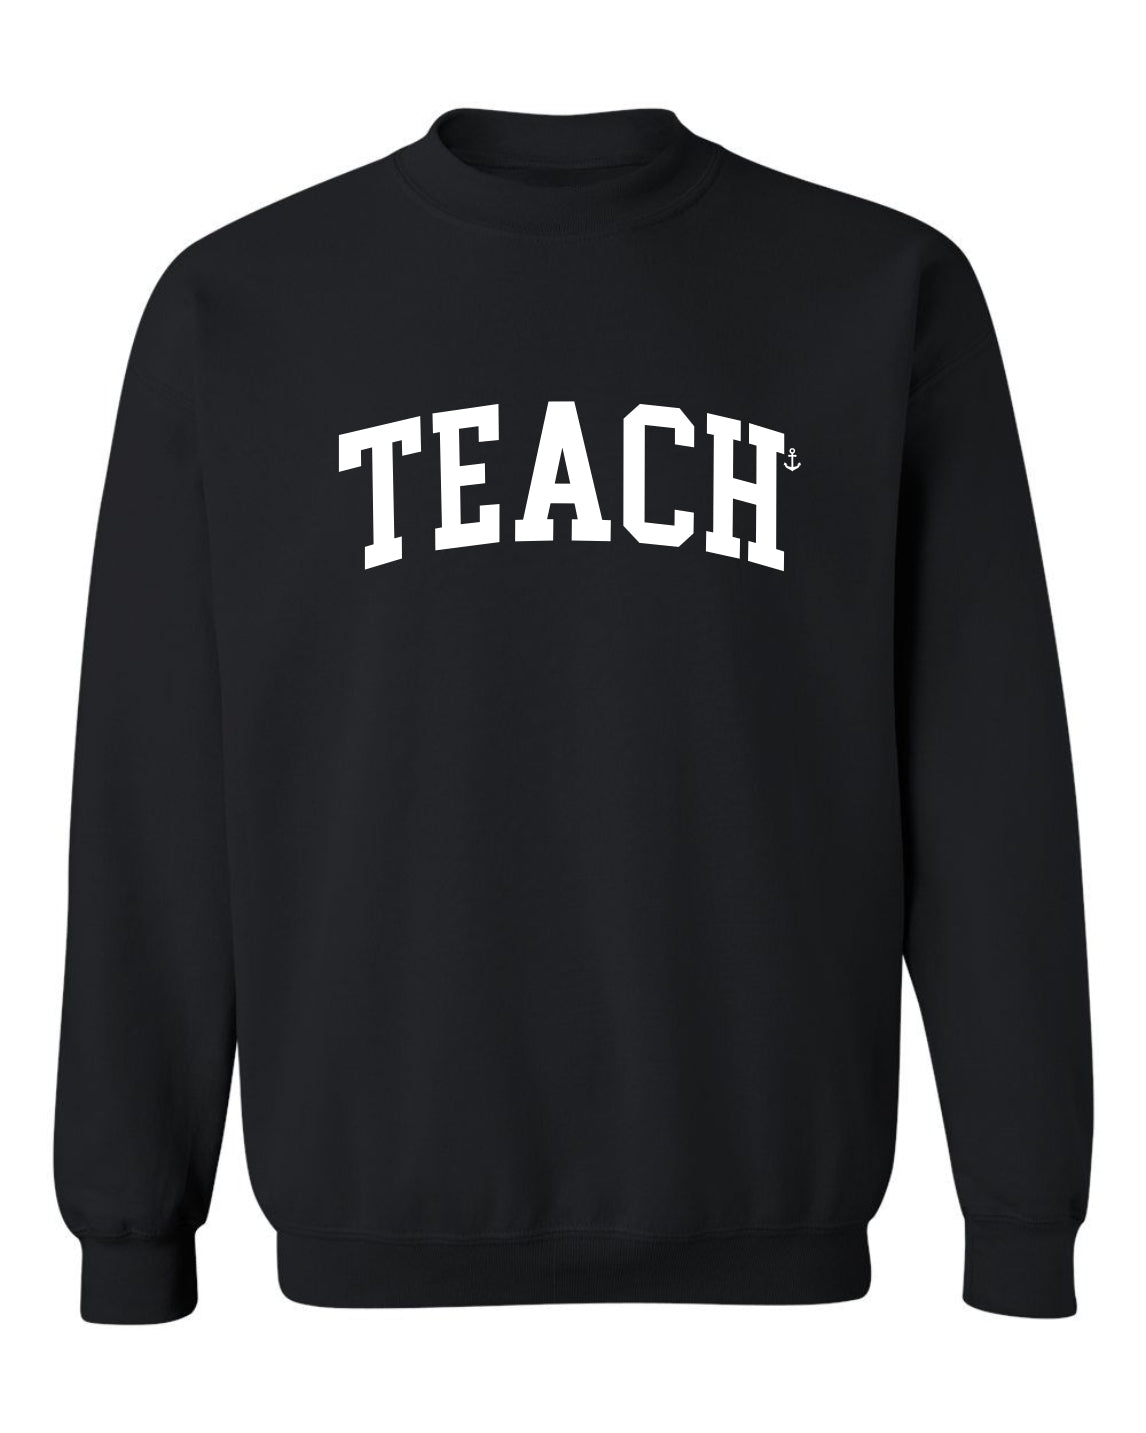 "Teach" Unisex Crewneck Sweatshirt